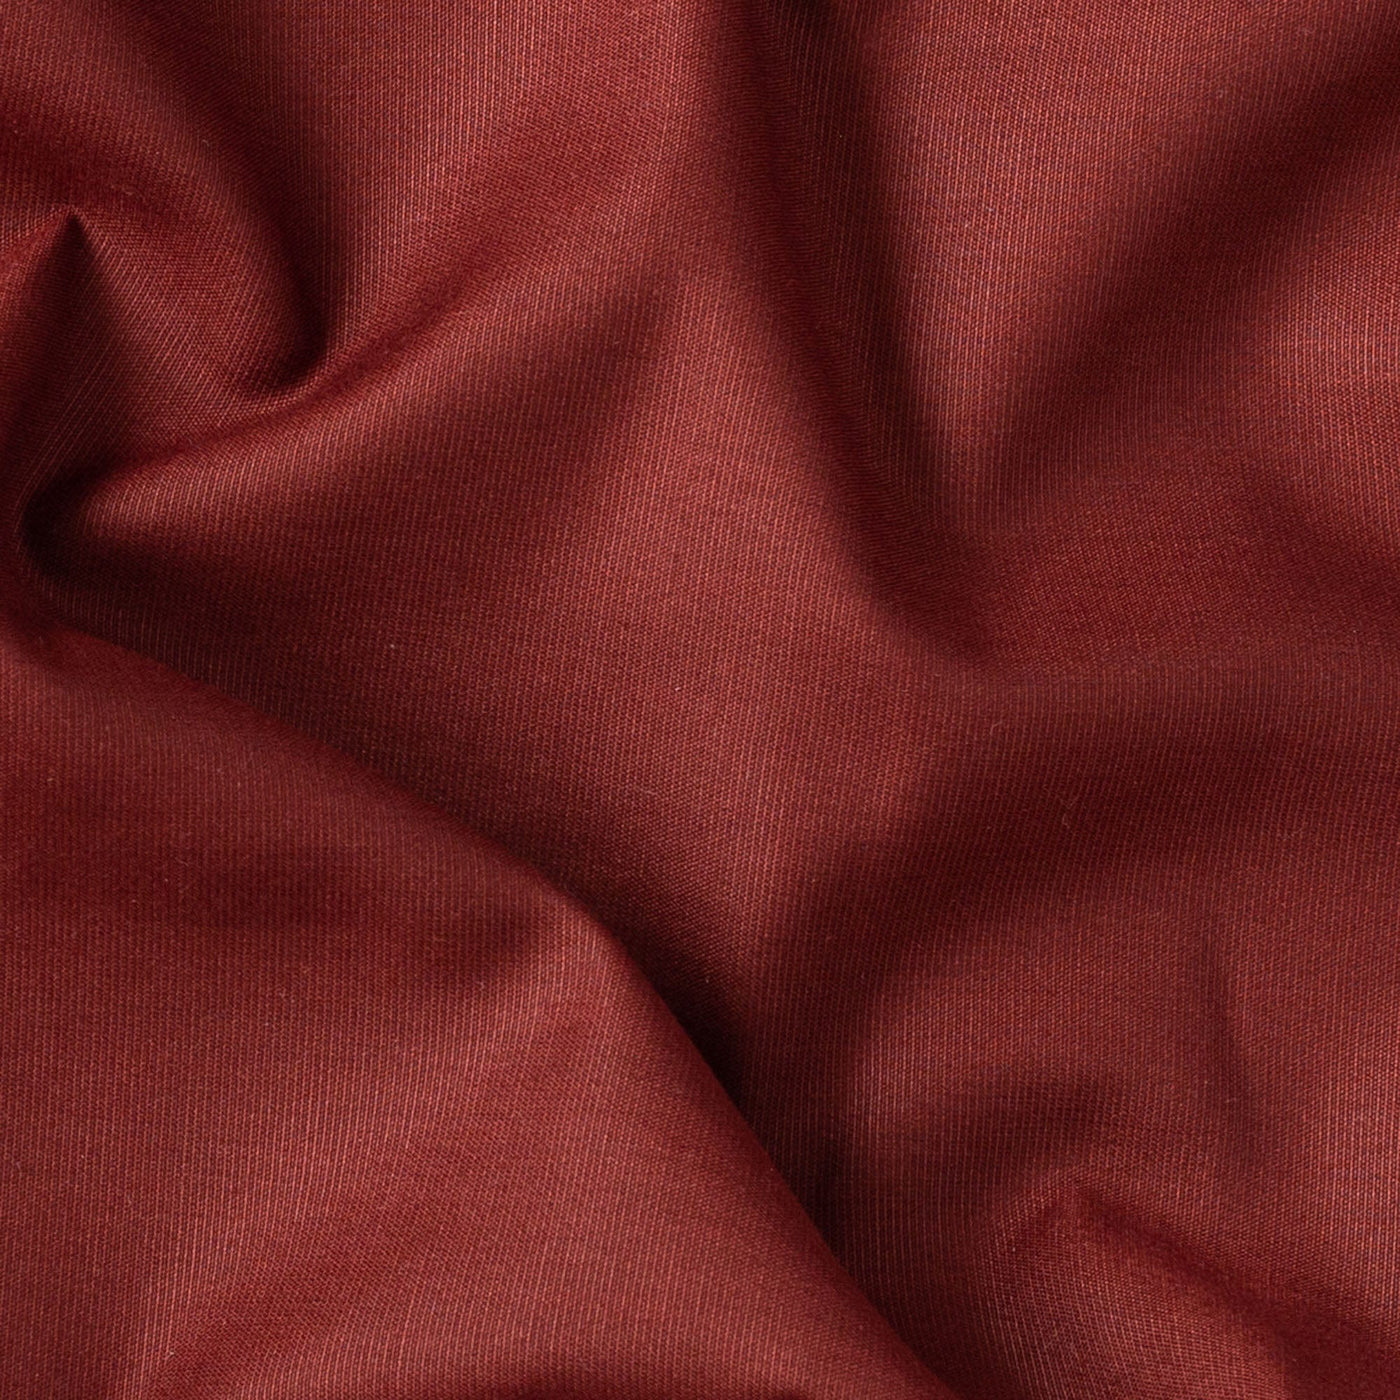 Fabric Pandit Cut Piece 0.75M (CUT PIECE) Dark Maroon Textured Cotton Men's Shirt Fabric (Width 58 inch)